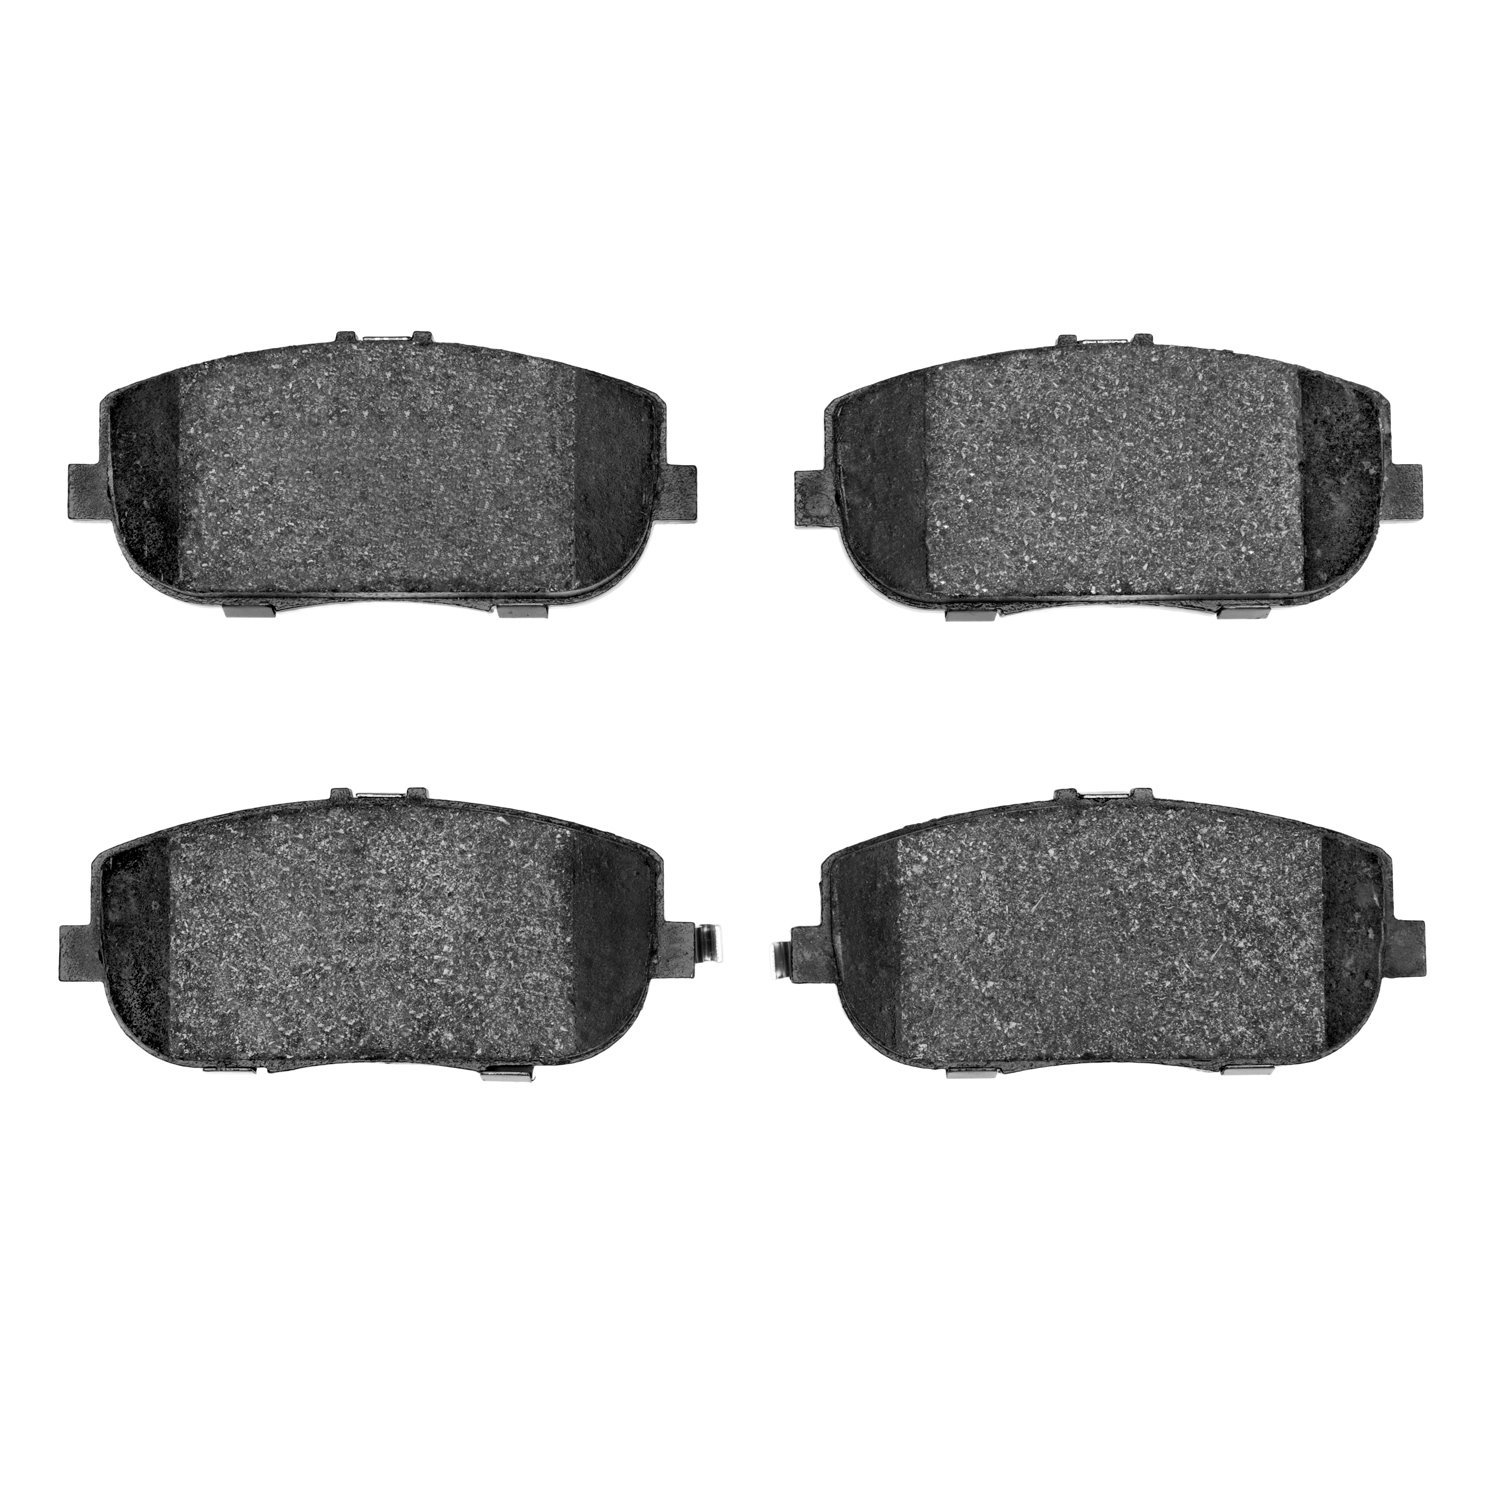 1551-1180-00 5000 Advanced Ceramic Brake Pads, Fits Select Multiple Makes/Models, Position: Rear